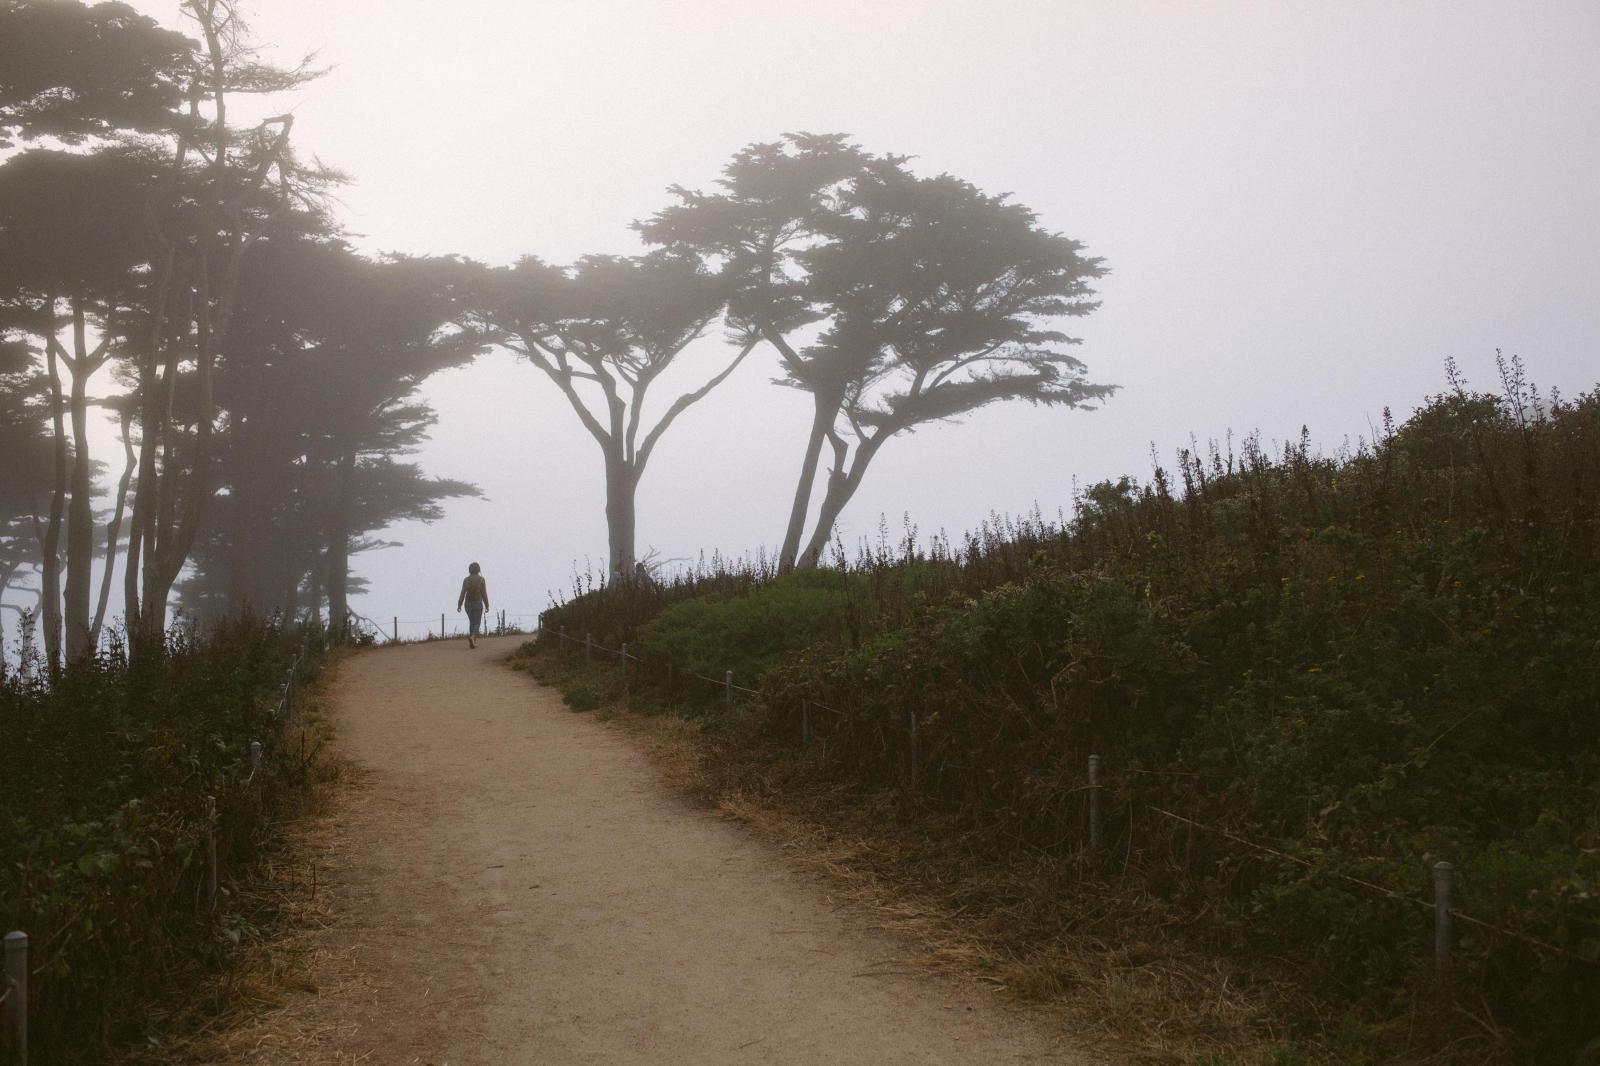 A traveler walks under the tree...s in San Francisco, California.